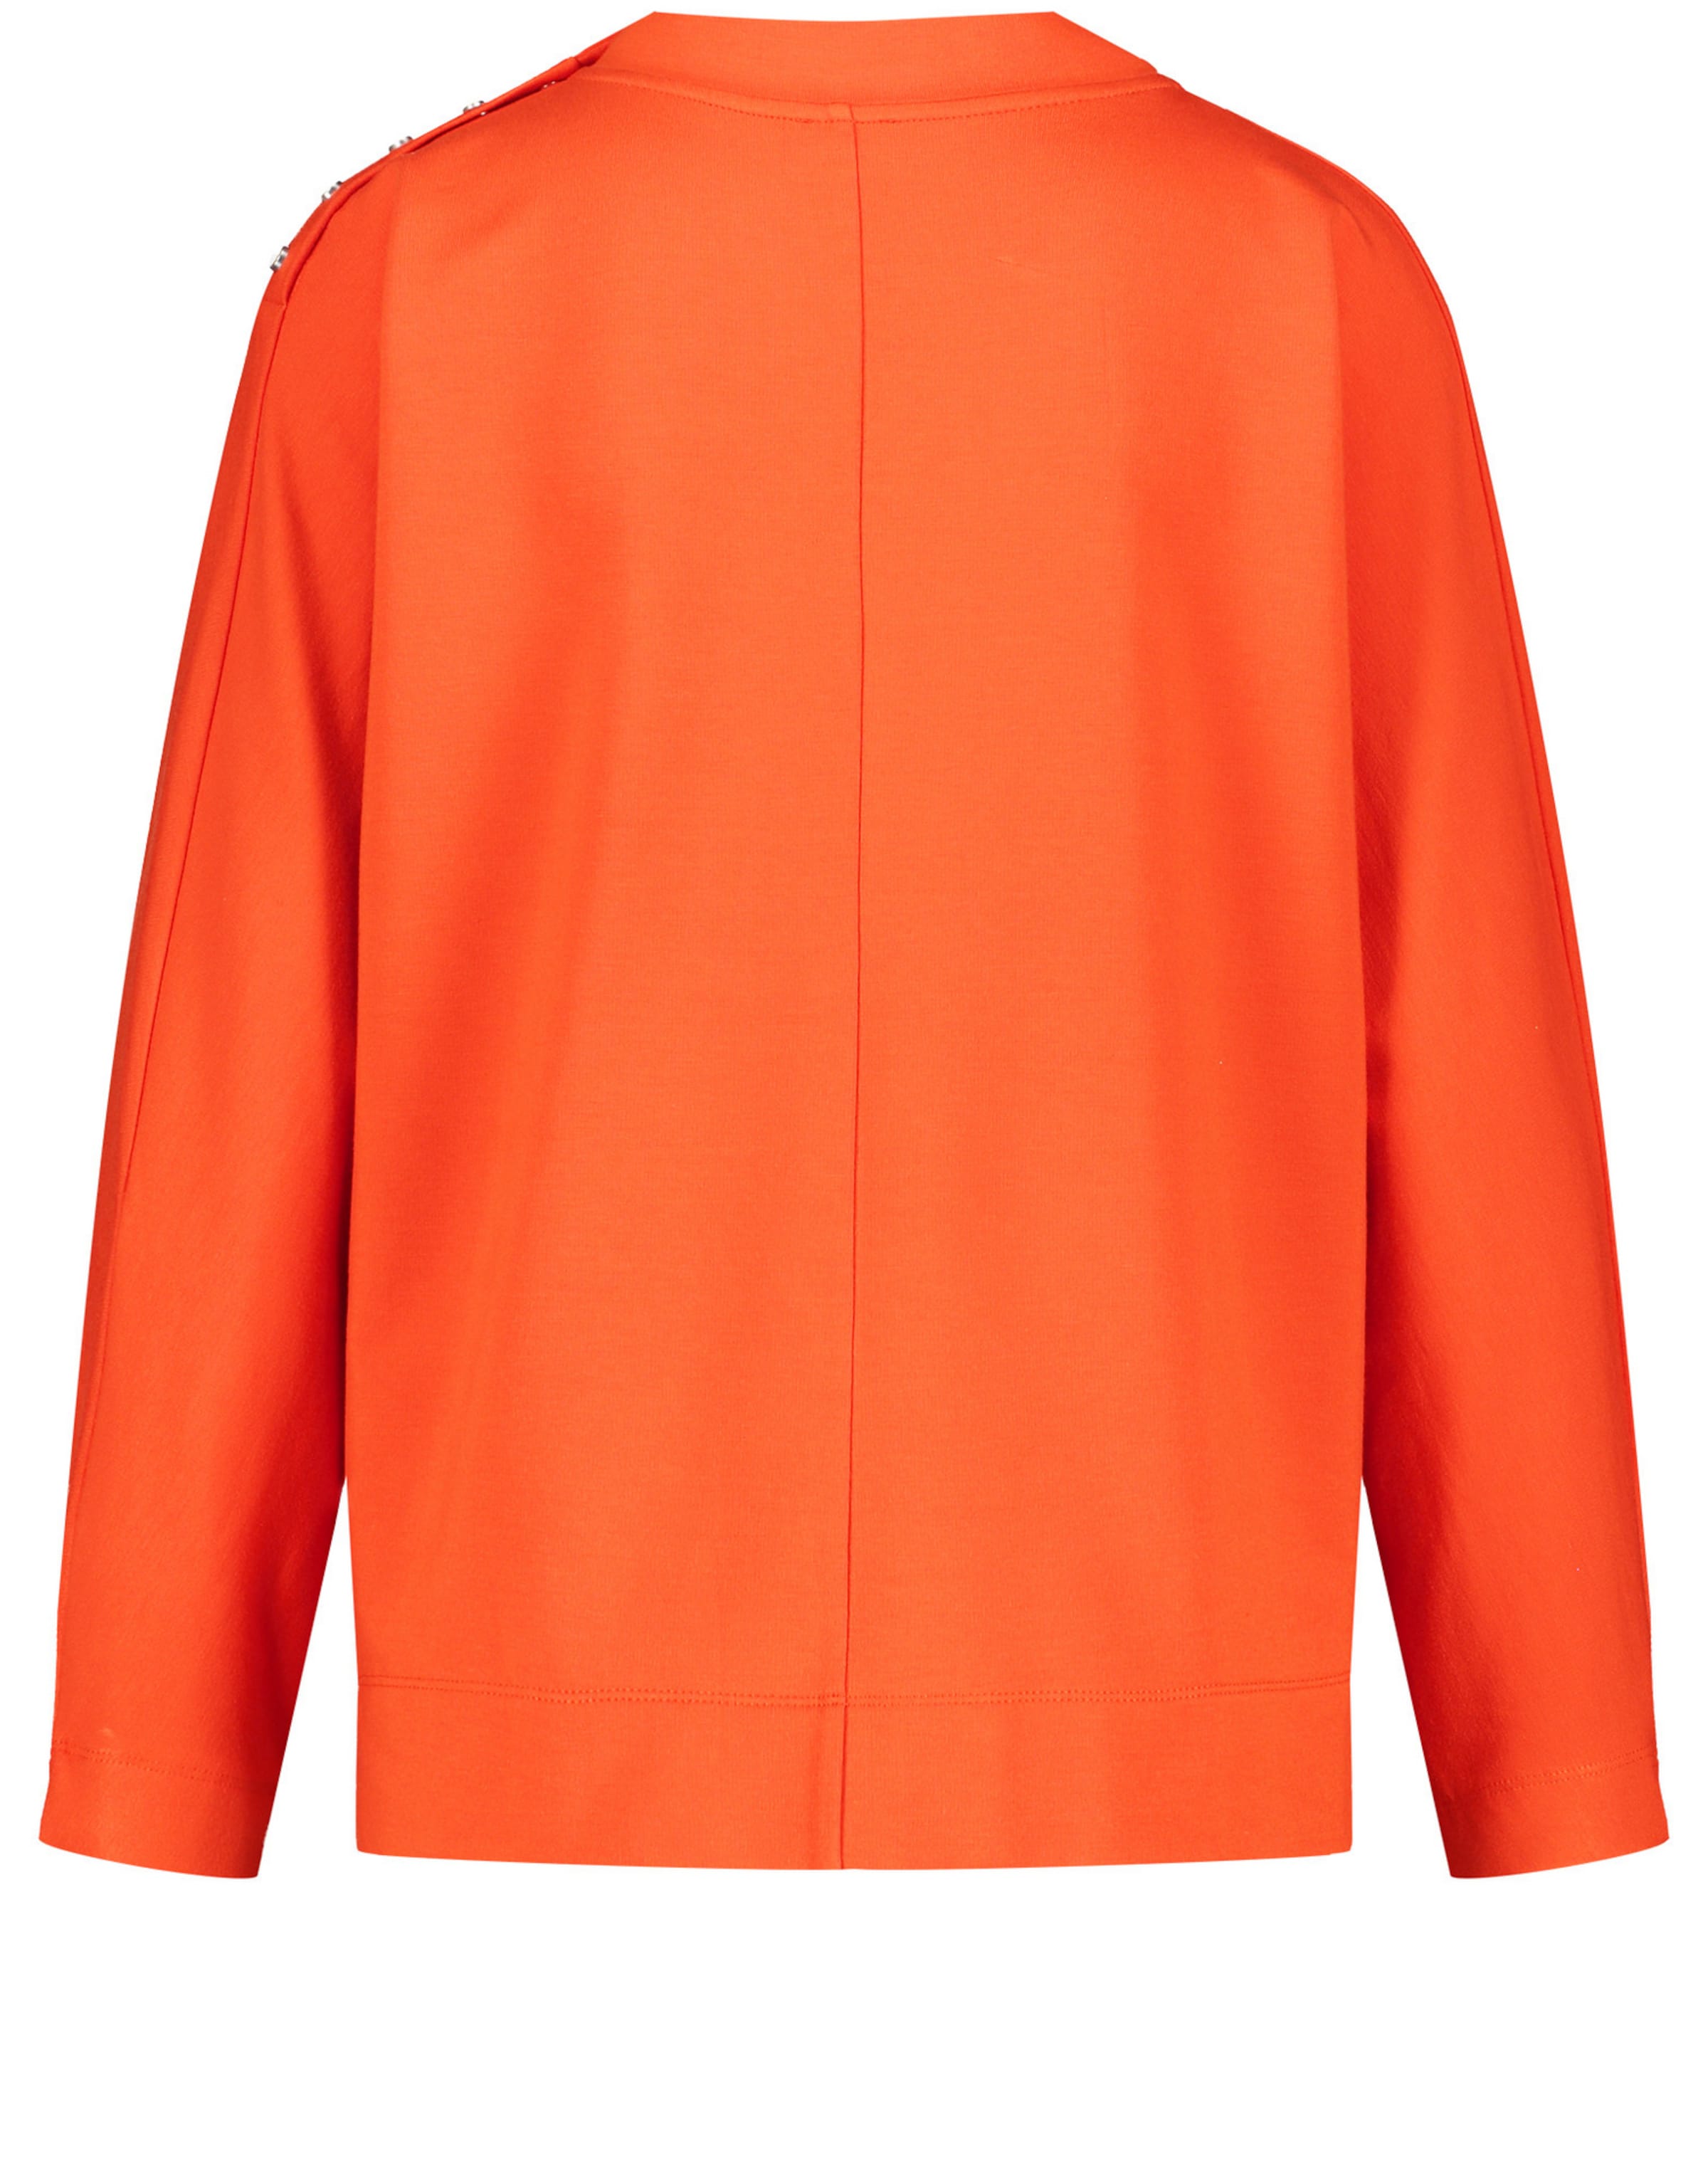 GERRY WEBER Shirt in Orange 